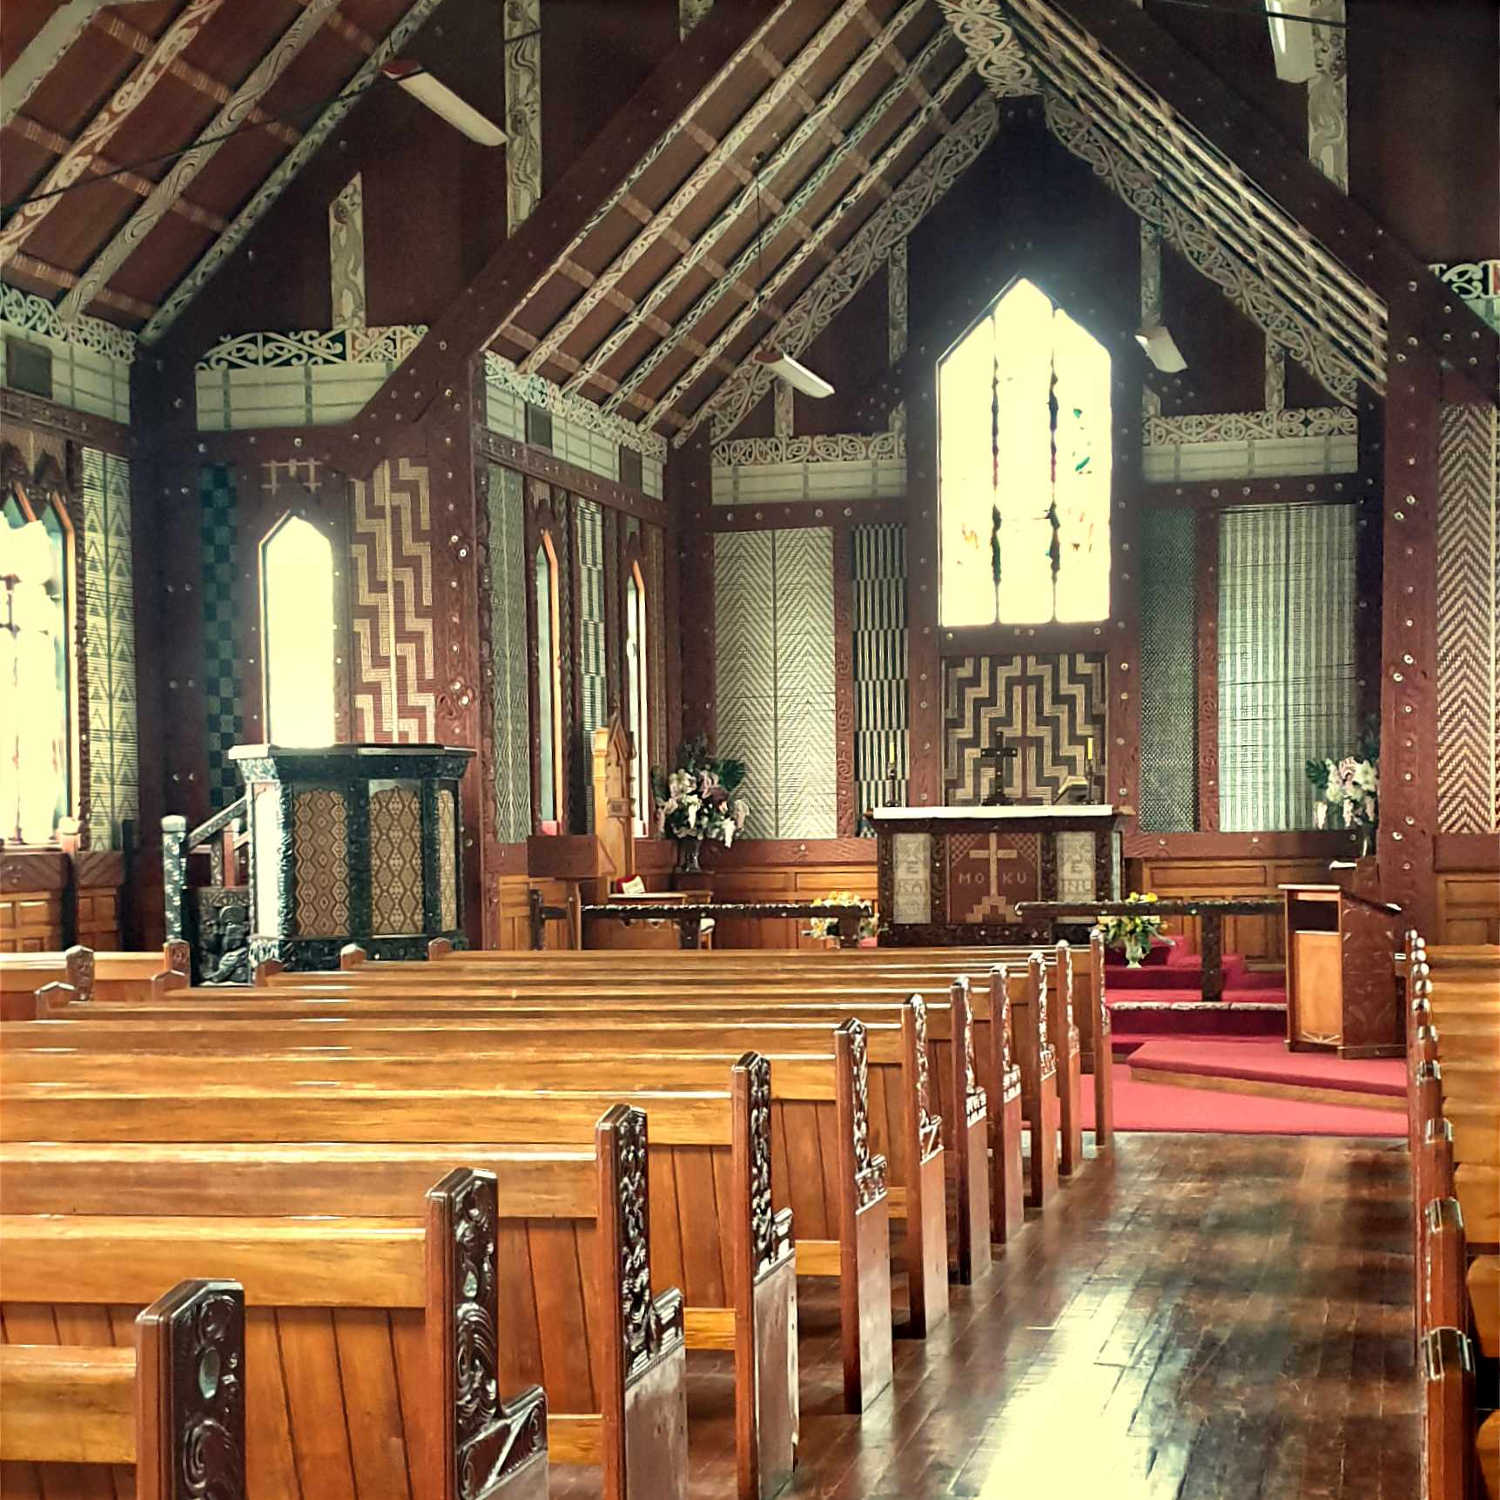 Tikitiki church interior